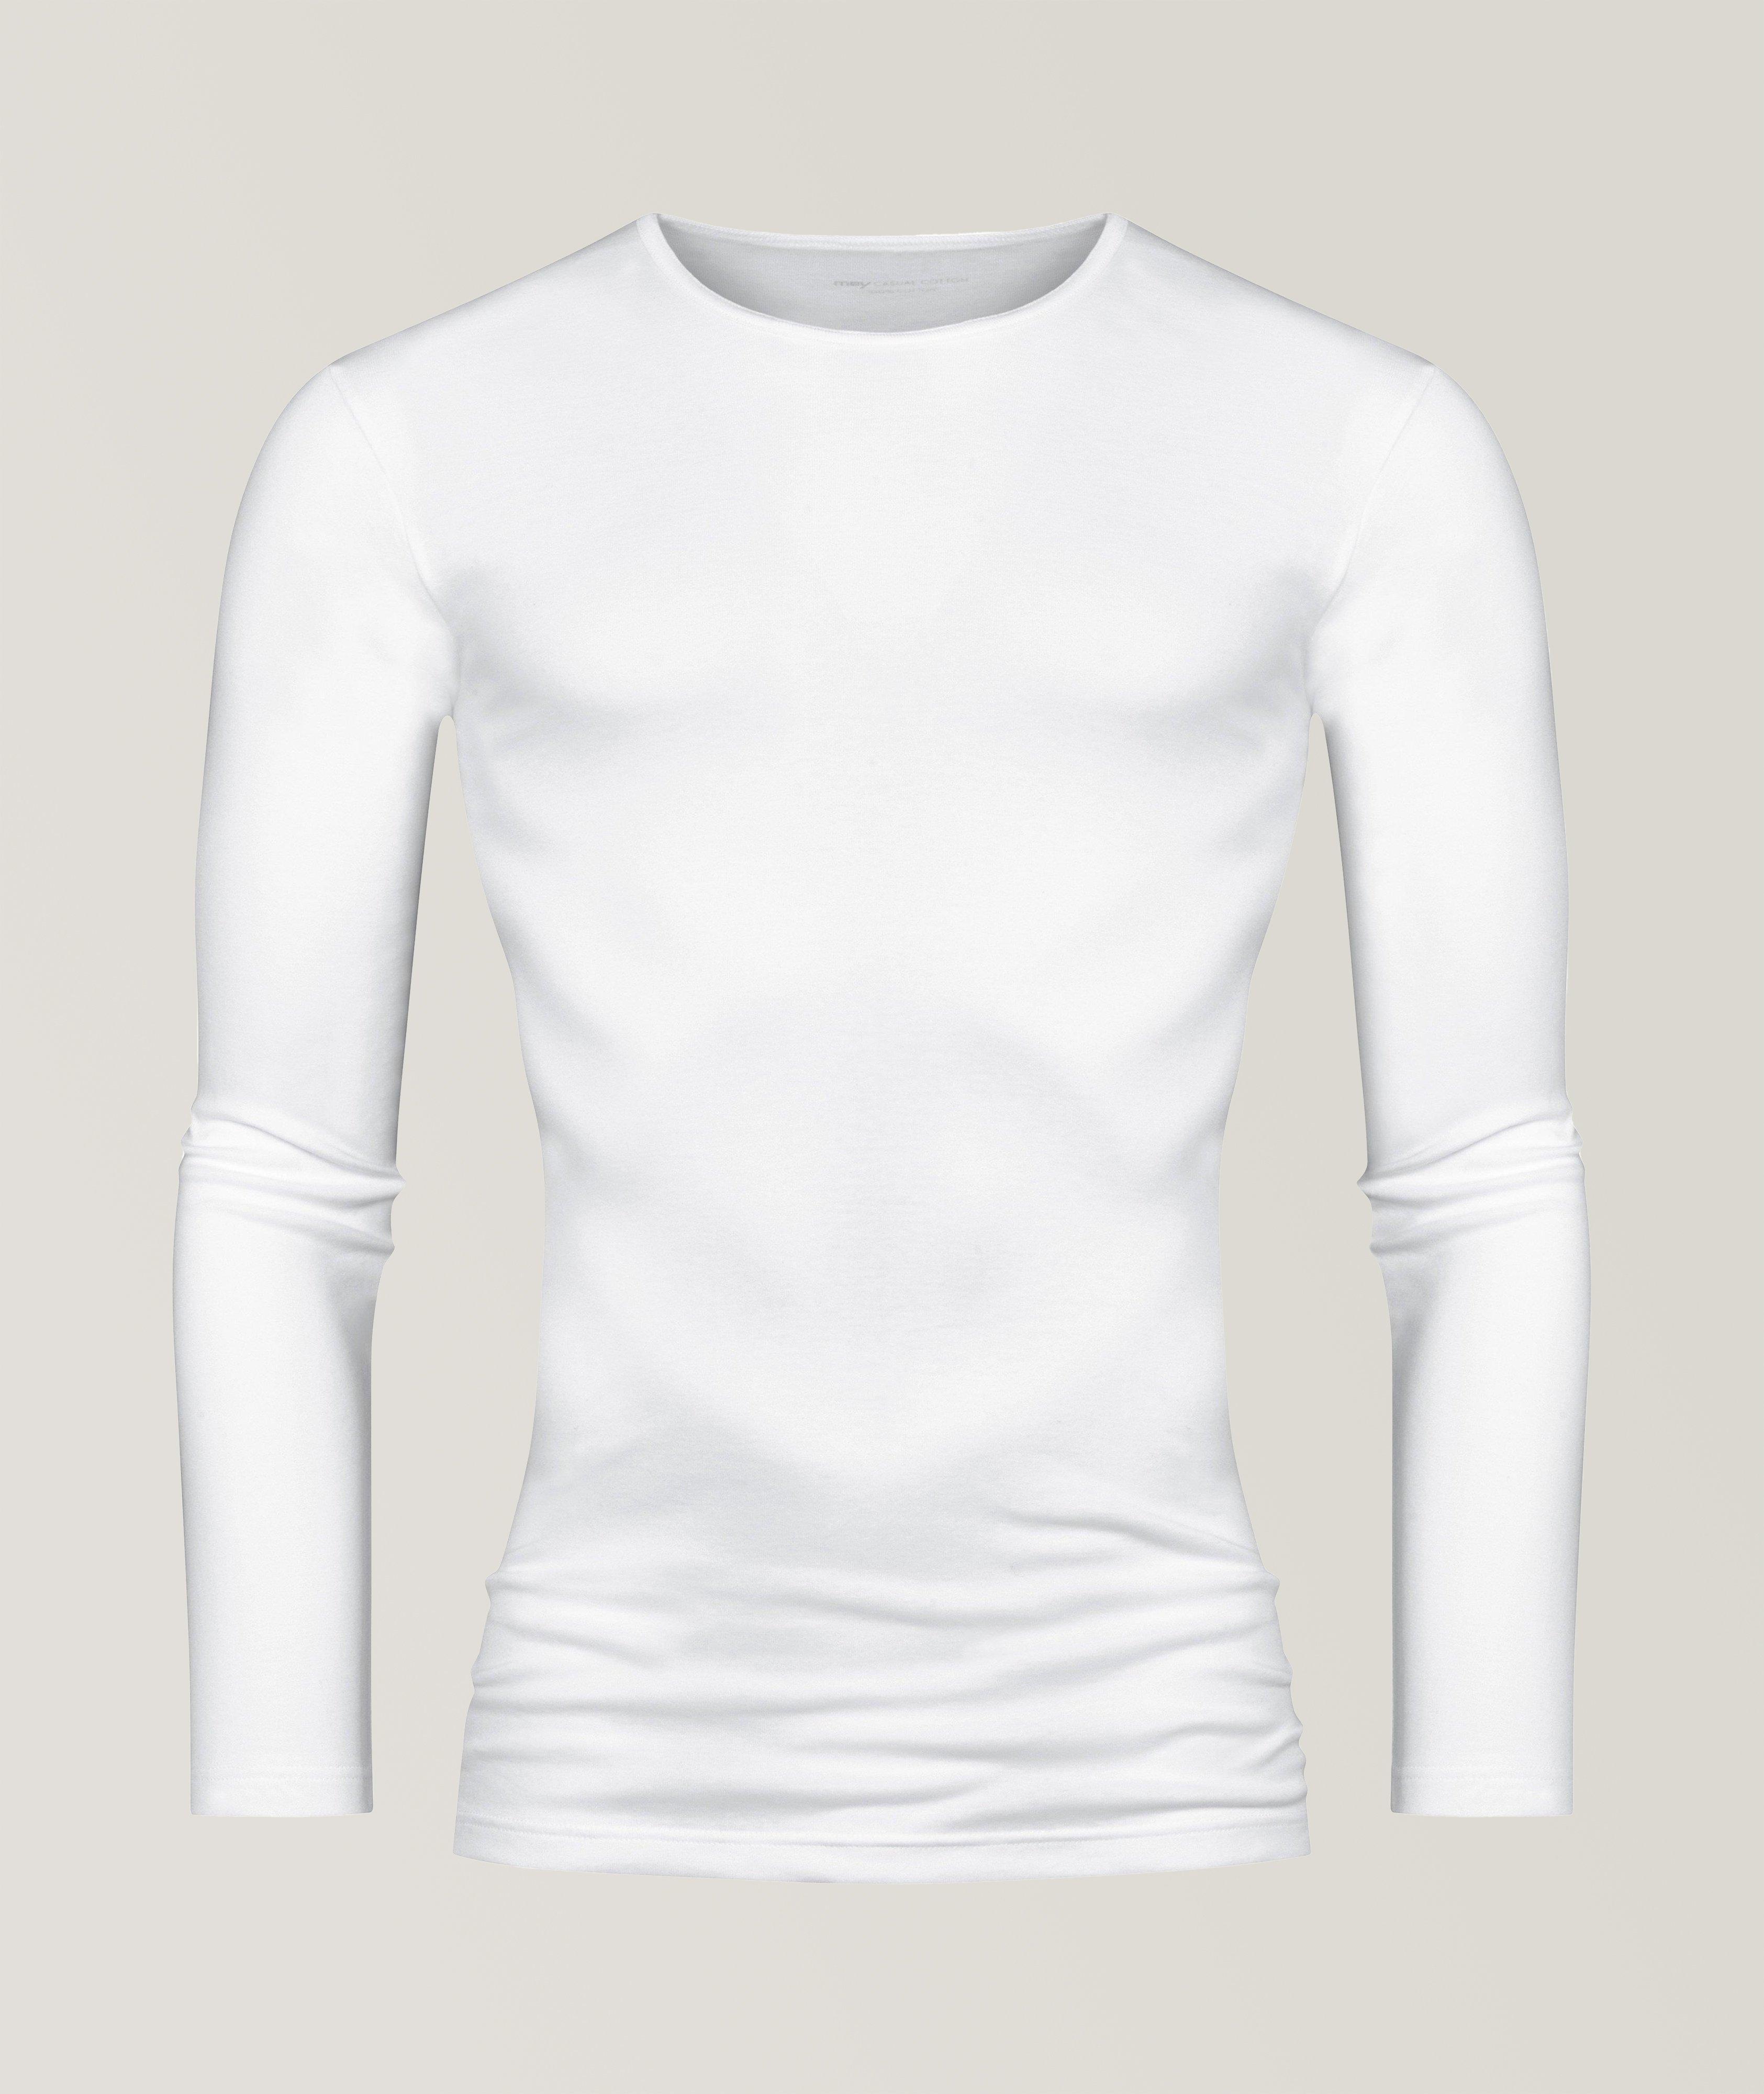 Casual Pima Cotton Long Sleeve T-Shirt image 0